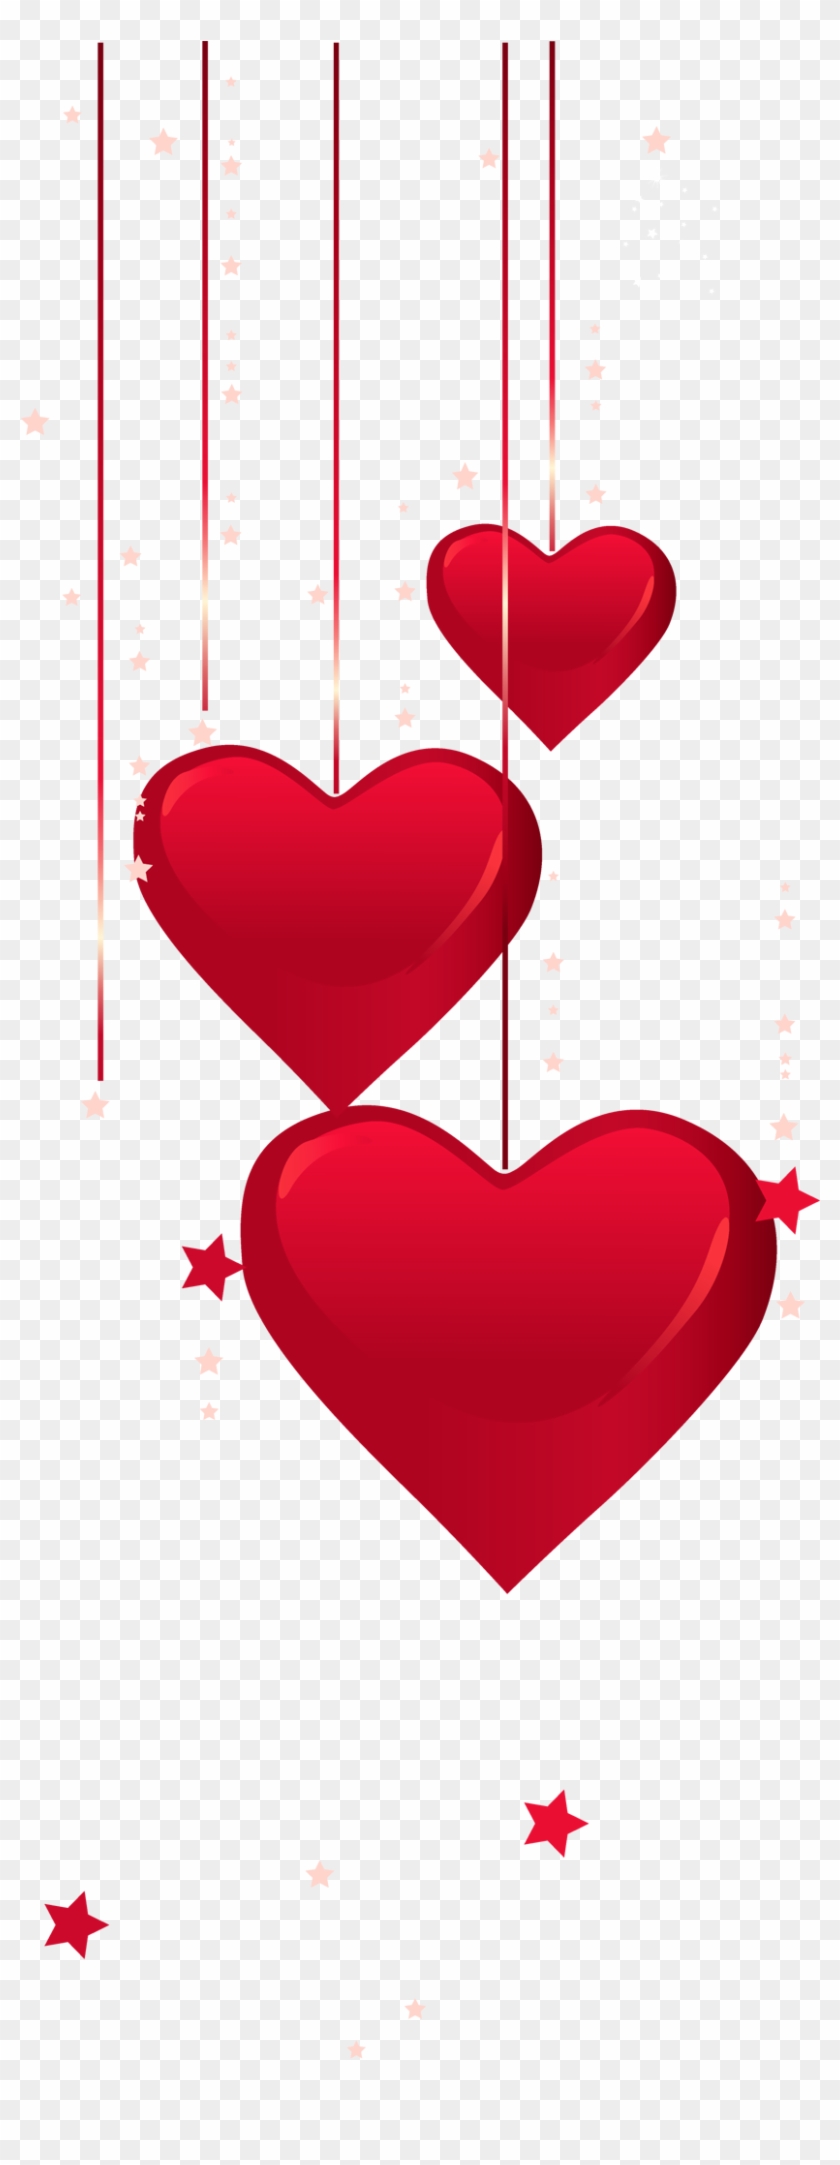 Hearts Decor Png Clipart - Hearts Decor Png #1047704